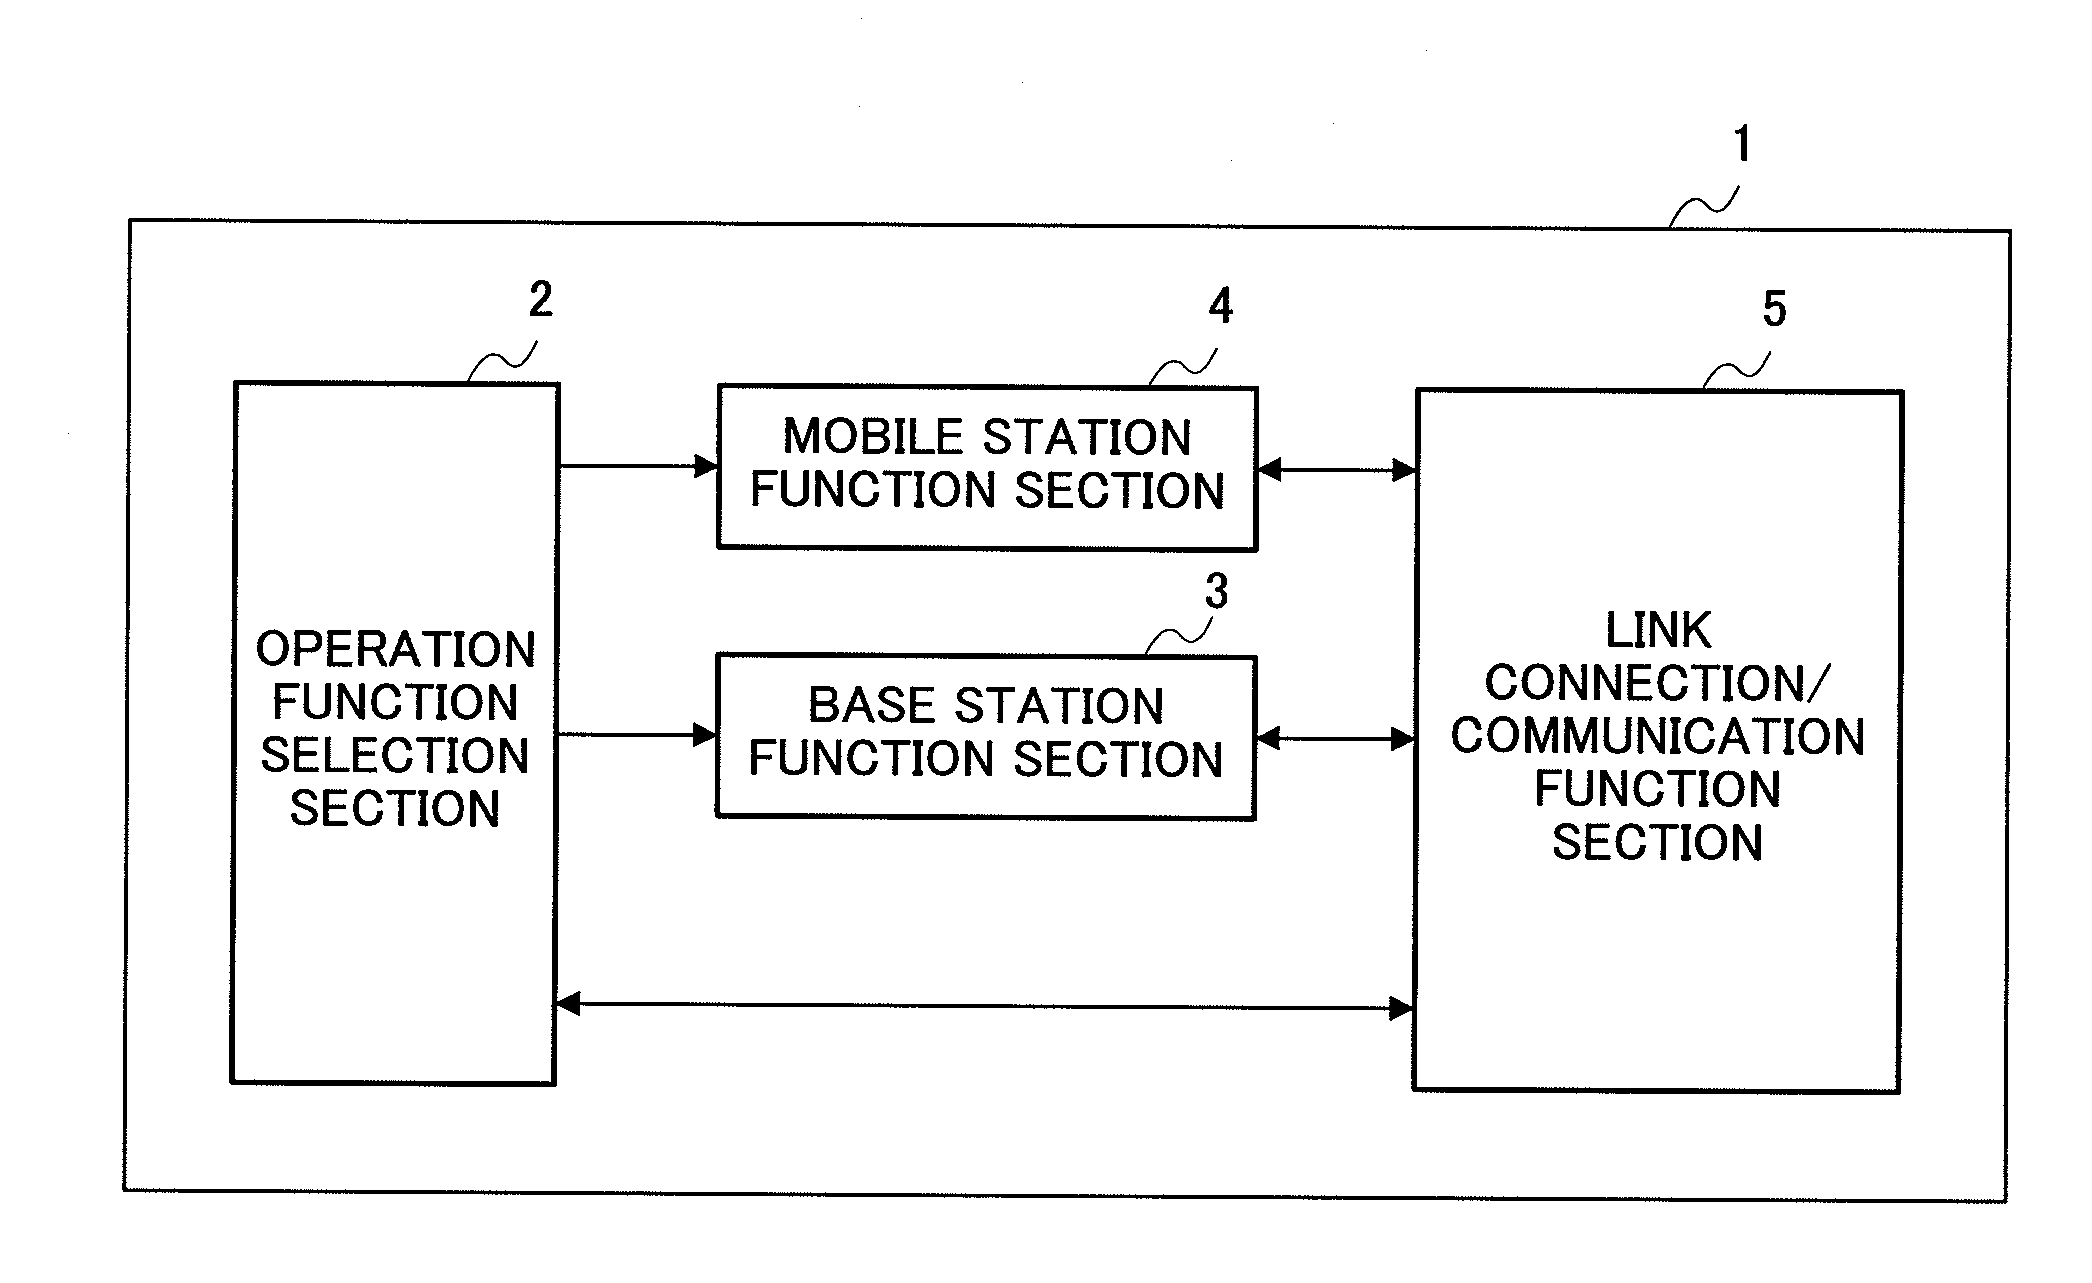 Display apparatus and display method